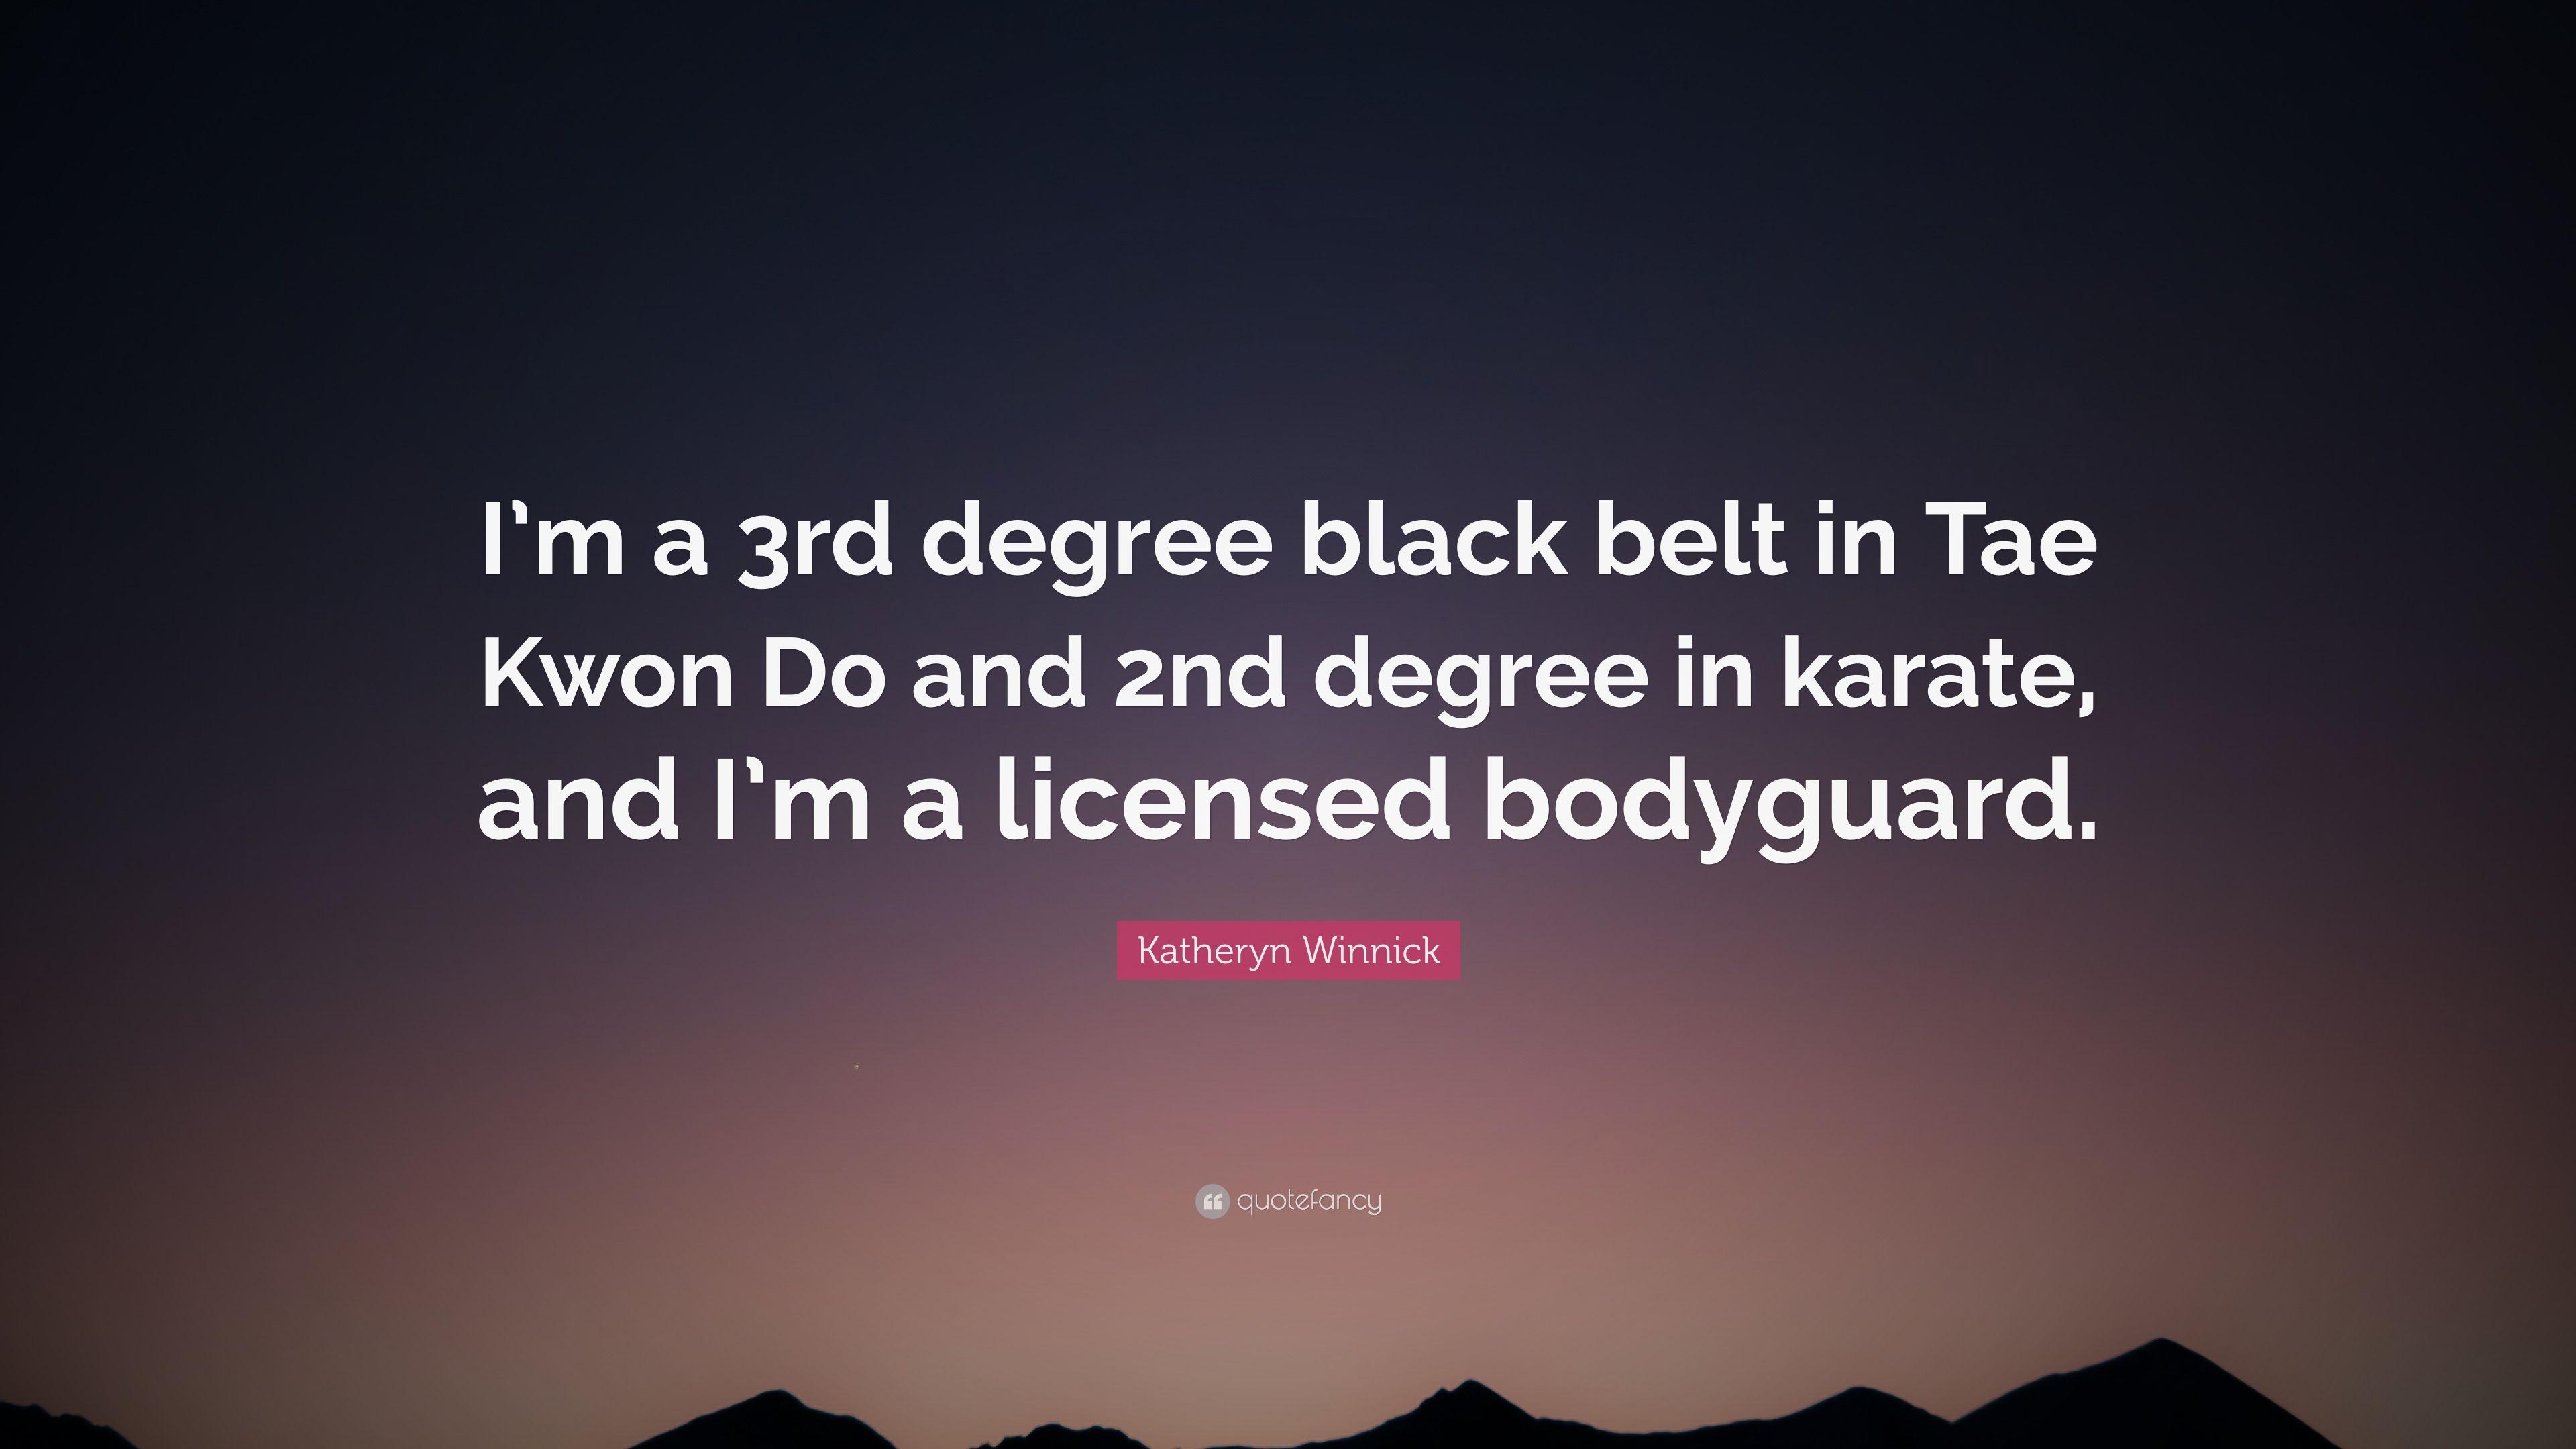 Katheryn Winnick Quote: “I'm a 3rd degree black belt in Tae Kwon Do